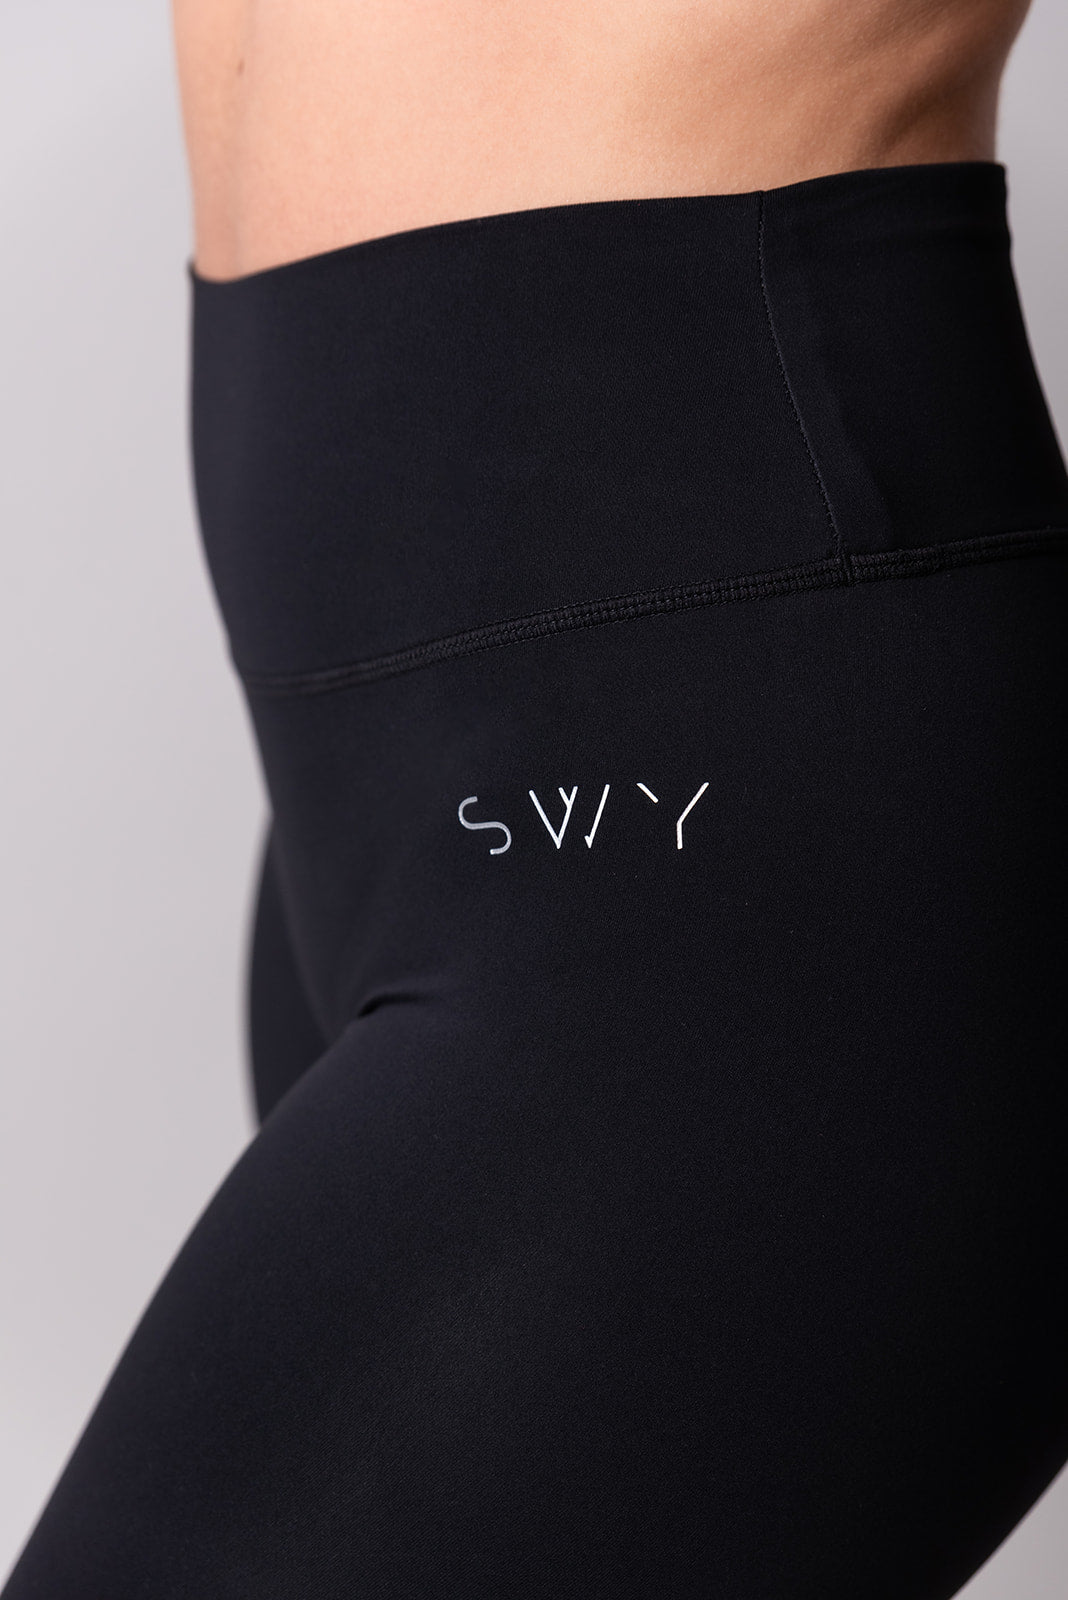 SoftLine Top – SWY Brand